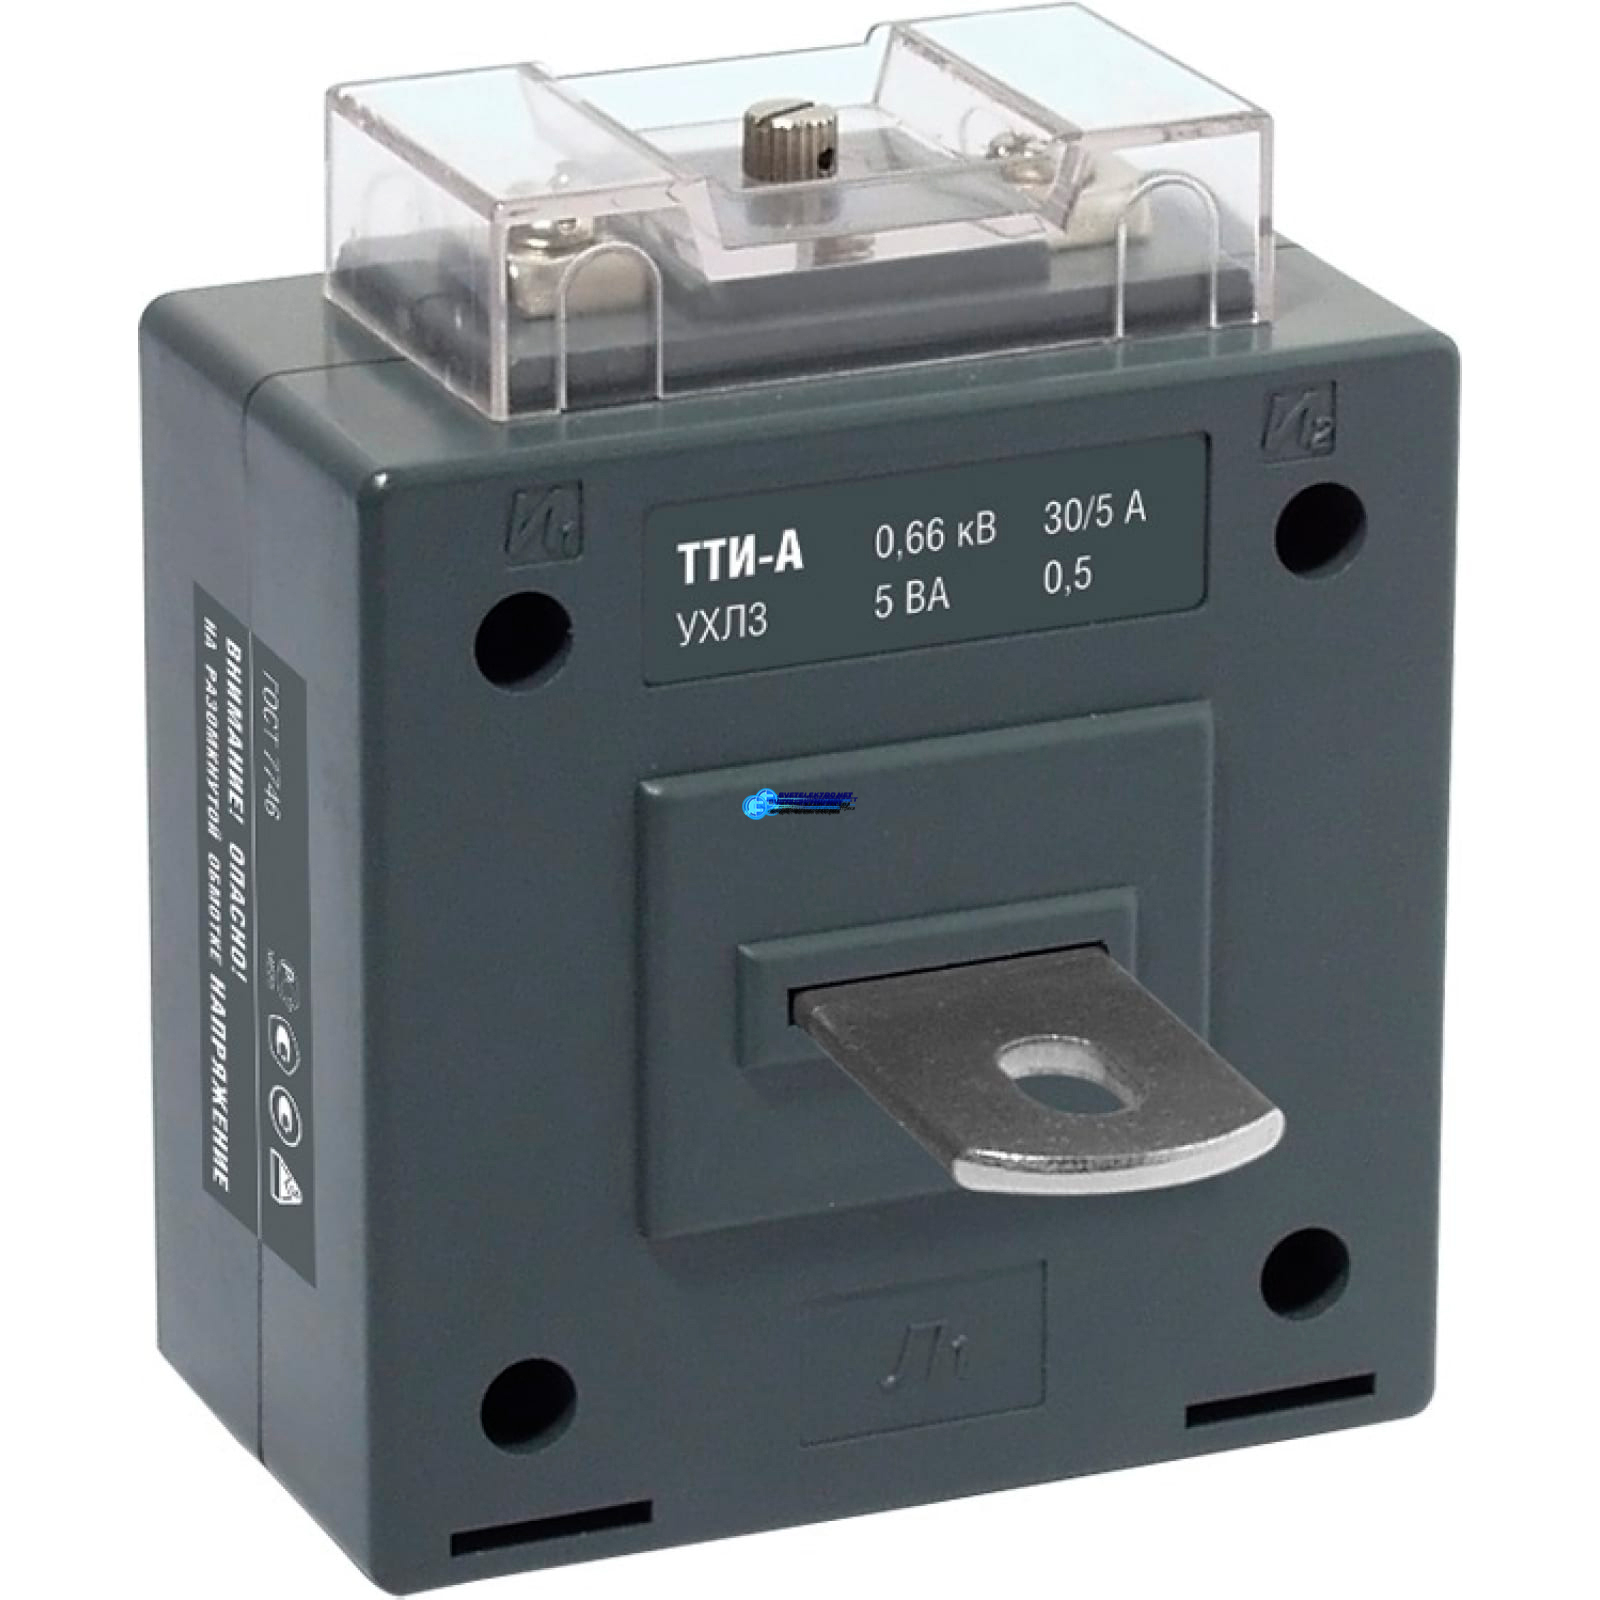 Трансформатор иэк. ТТИ-А 200/5а 5ва 0,5 IEK. Трансформатор тока измерительный с шиной ТТН-Ш 100/5- 5va/0,5s-р TDM. Трансформатор тока ТТИ-А 300/5а 5ва класс 0,5 ИЭК. Трансформатор тока TDM 200/5.